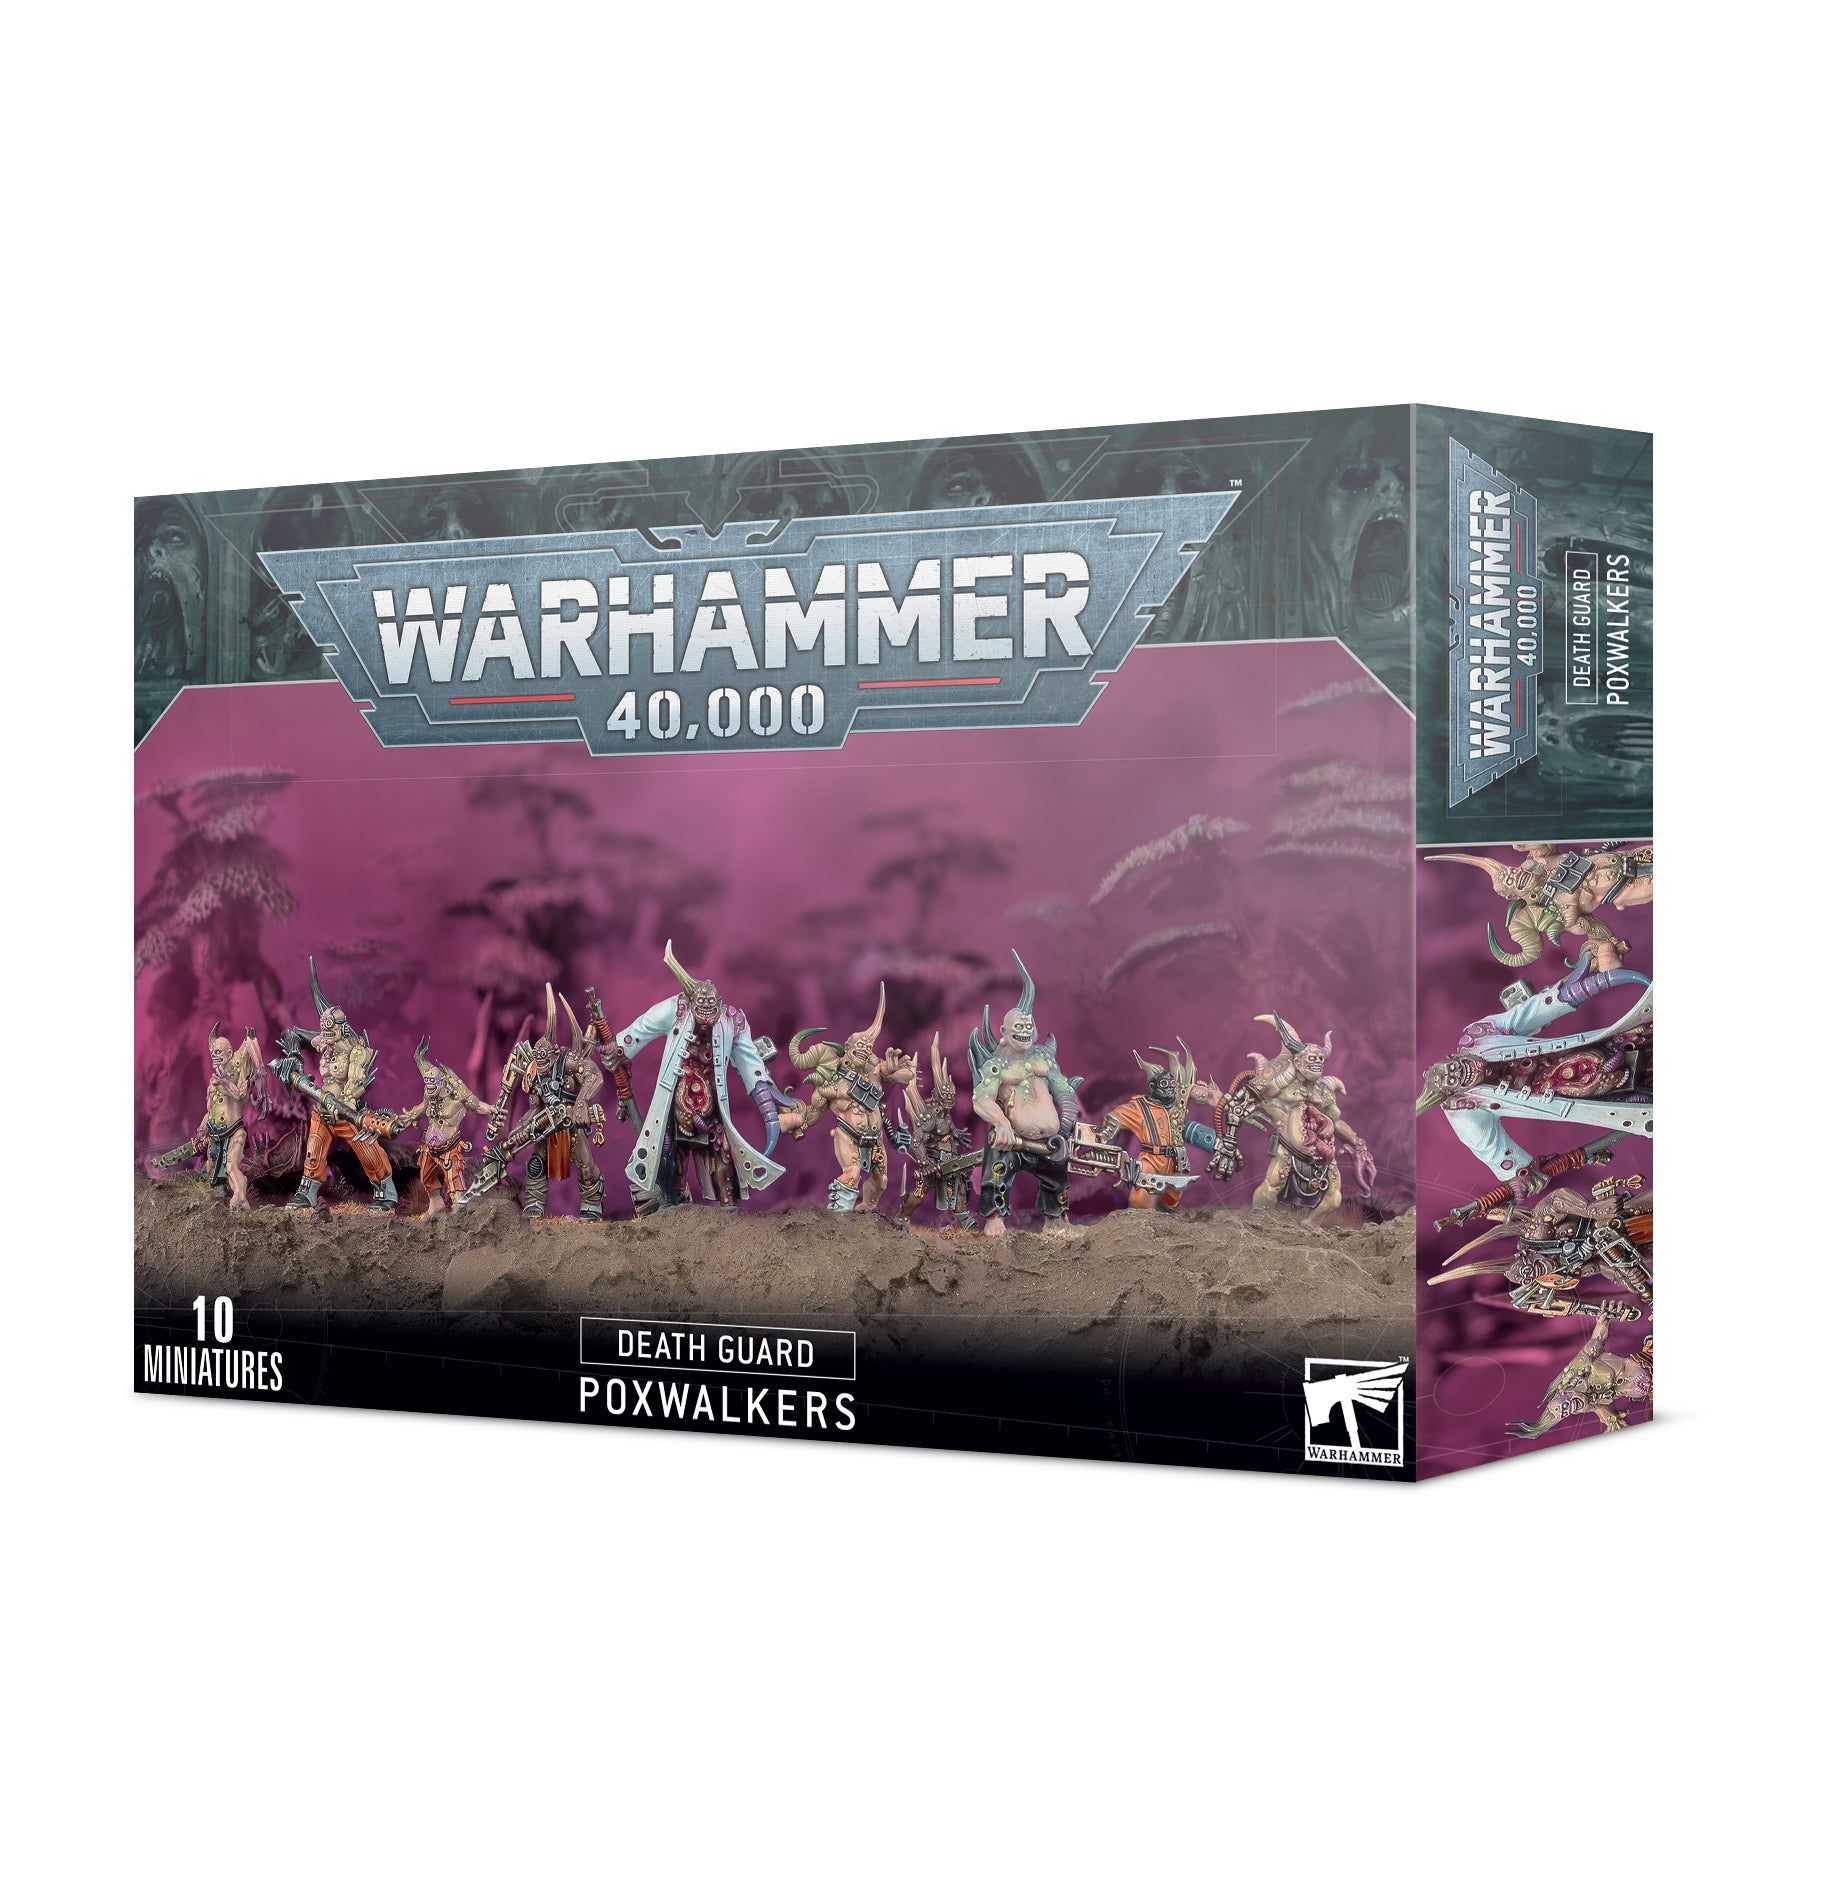 Warhammer 40,000: Death Guard Poxwalkers